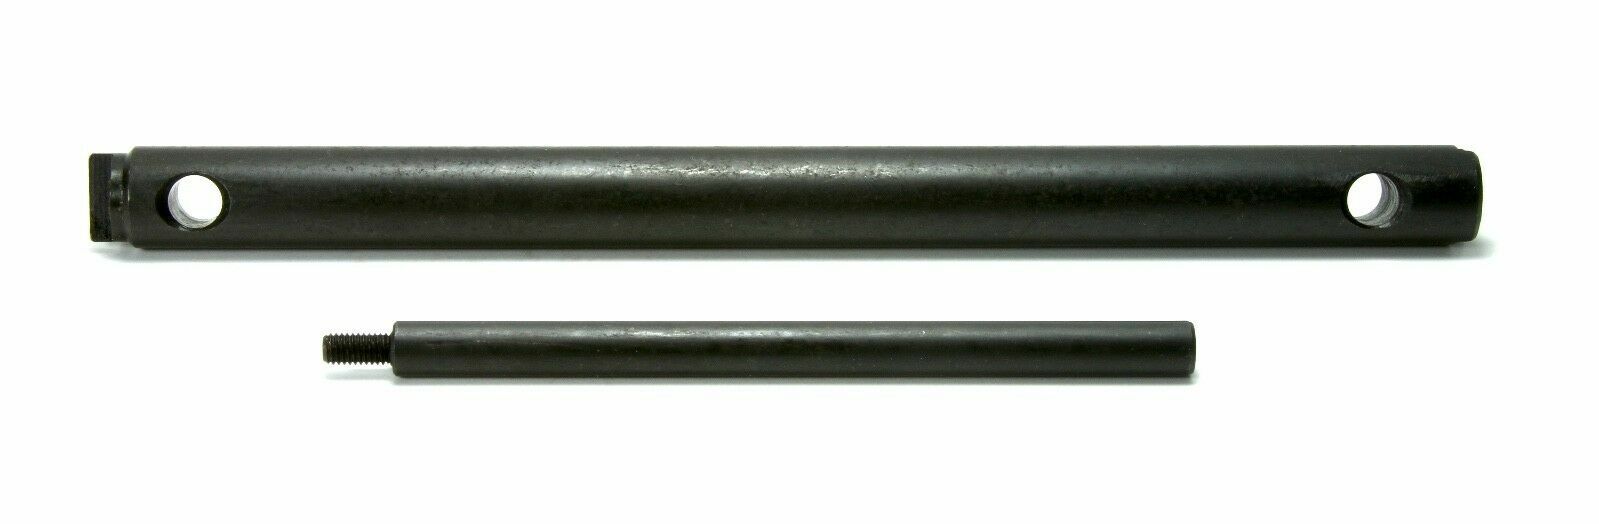 CVA Black Powder Rifle Breech Plug/Nipple Wrench For CVA In-Line Rifles-AC1603